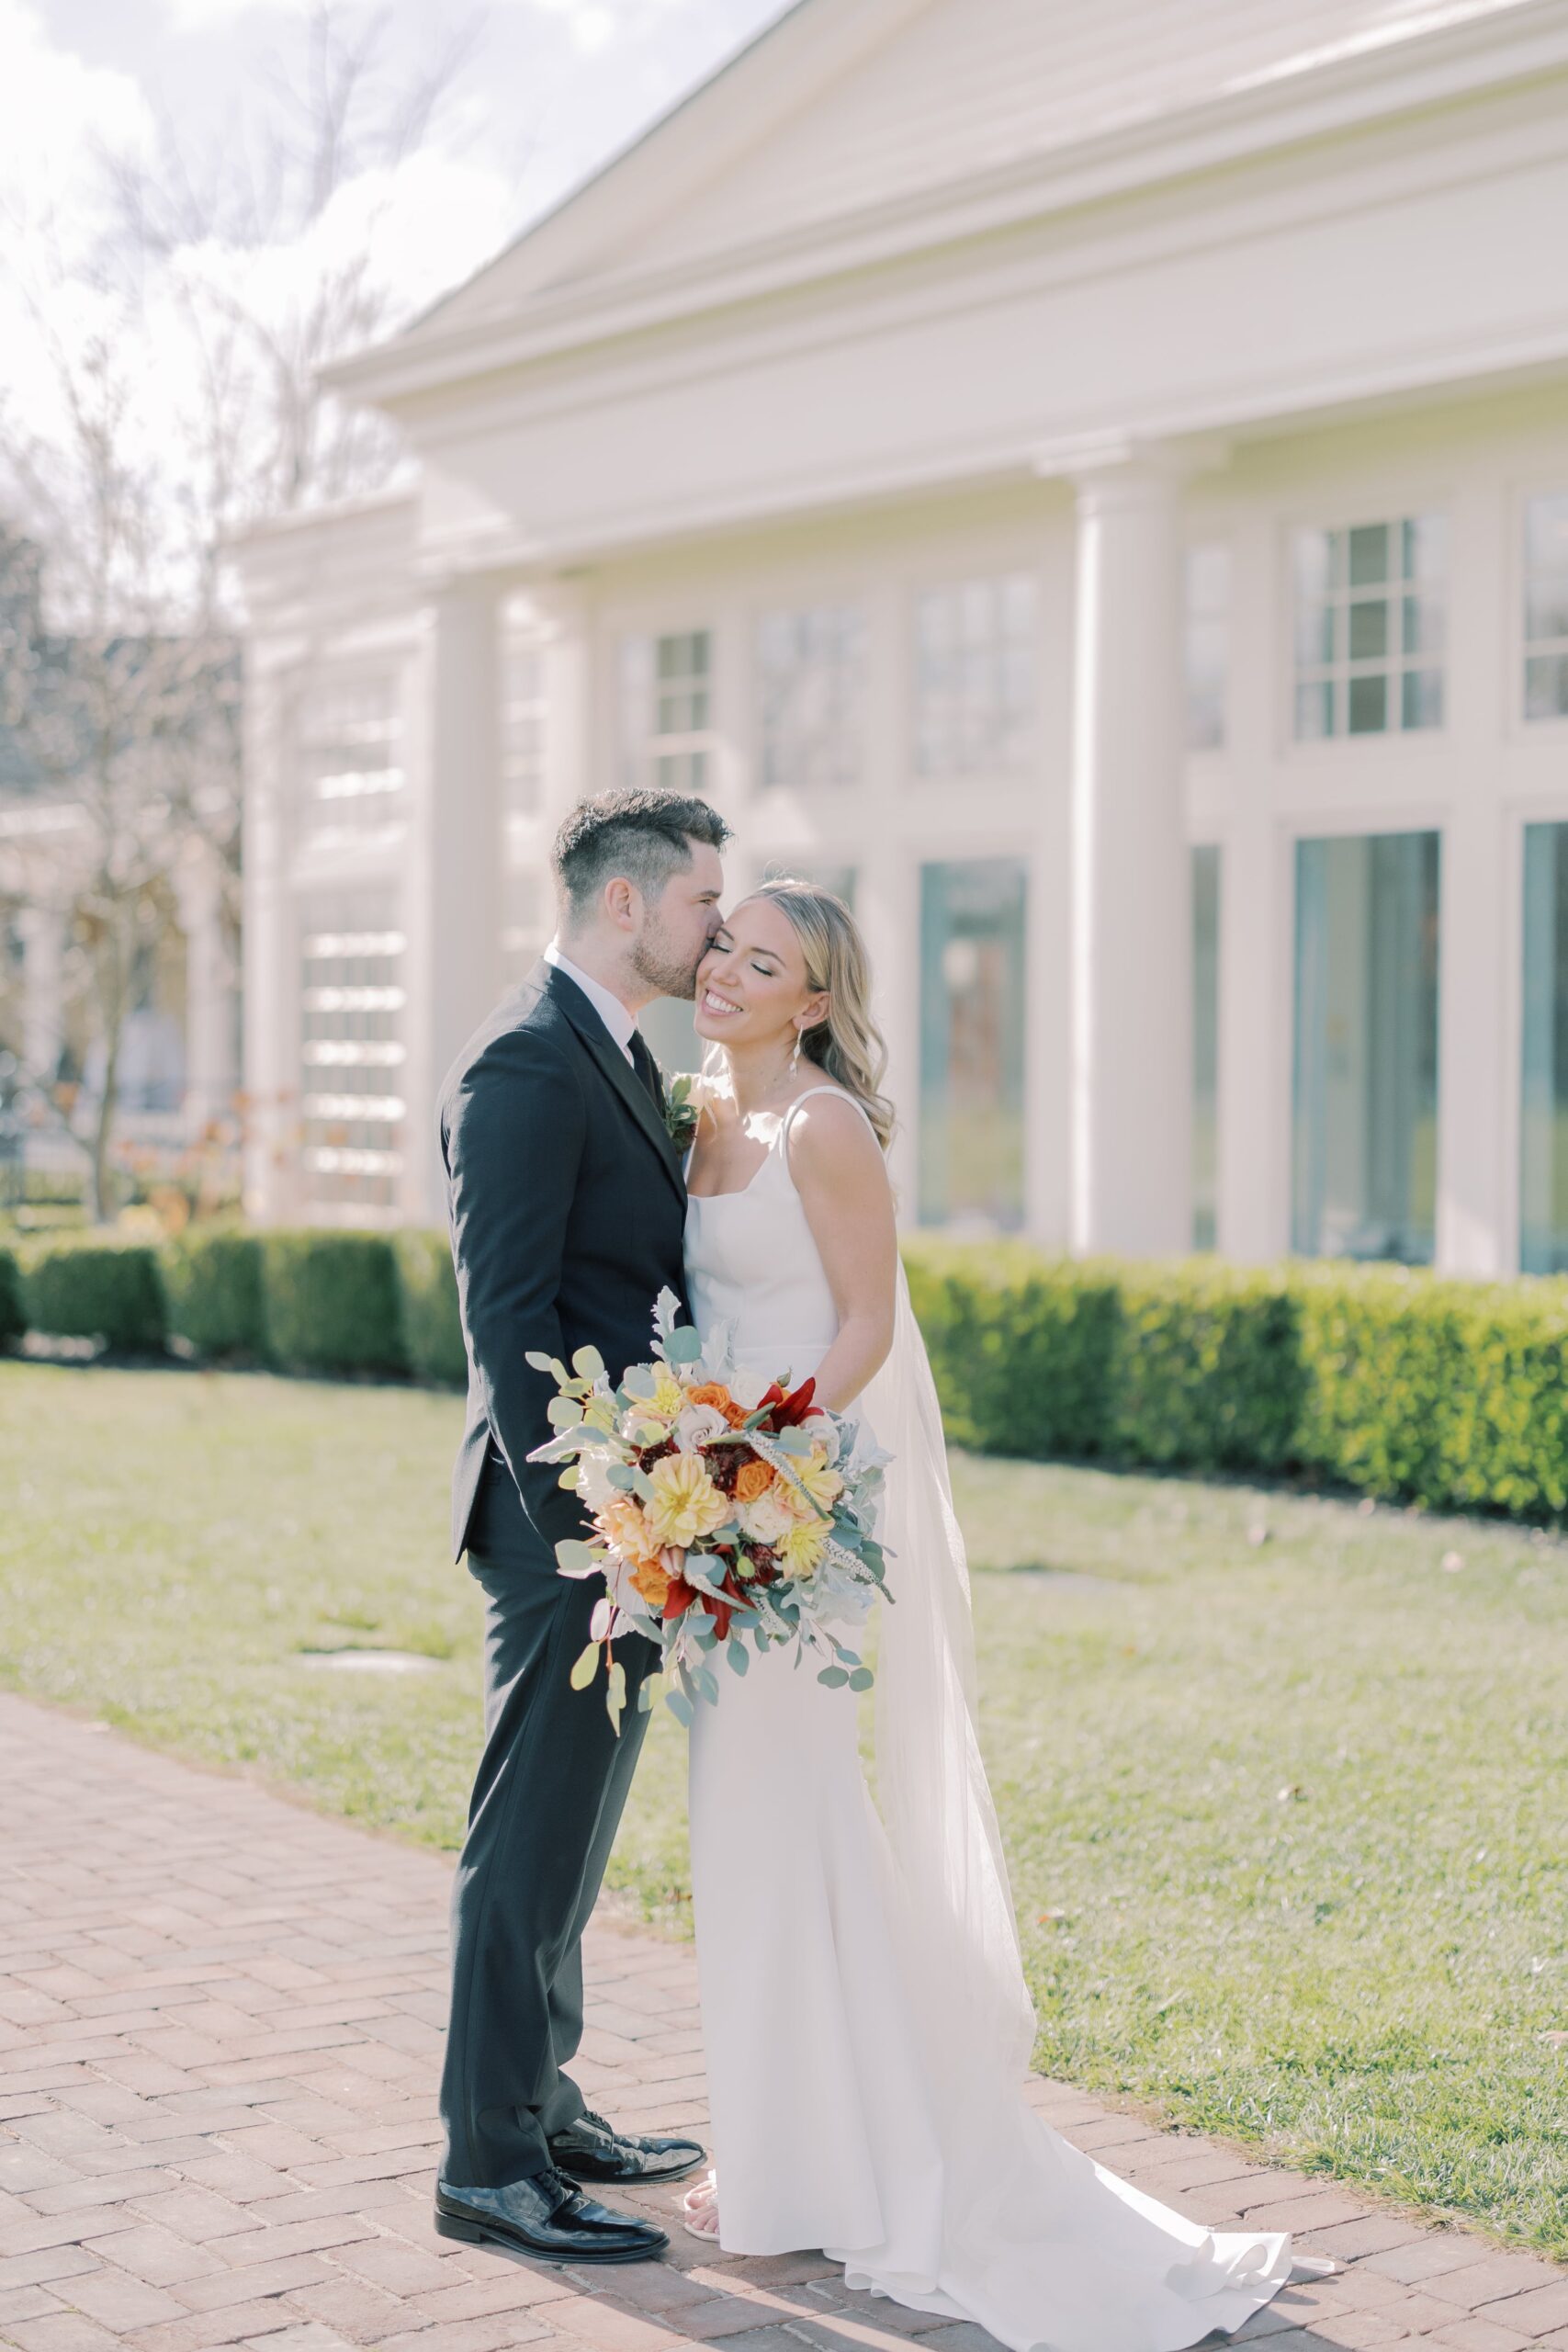 5 Reasons To Print Your Wedding Photos | Pennsylvania Wedding Photographer